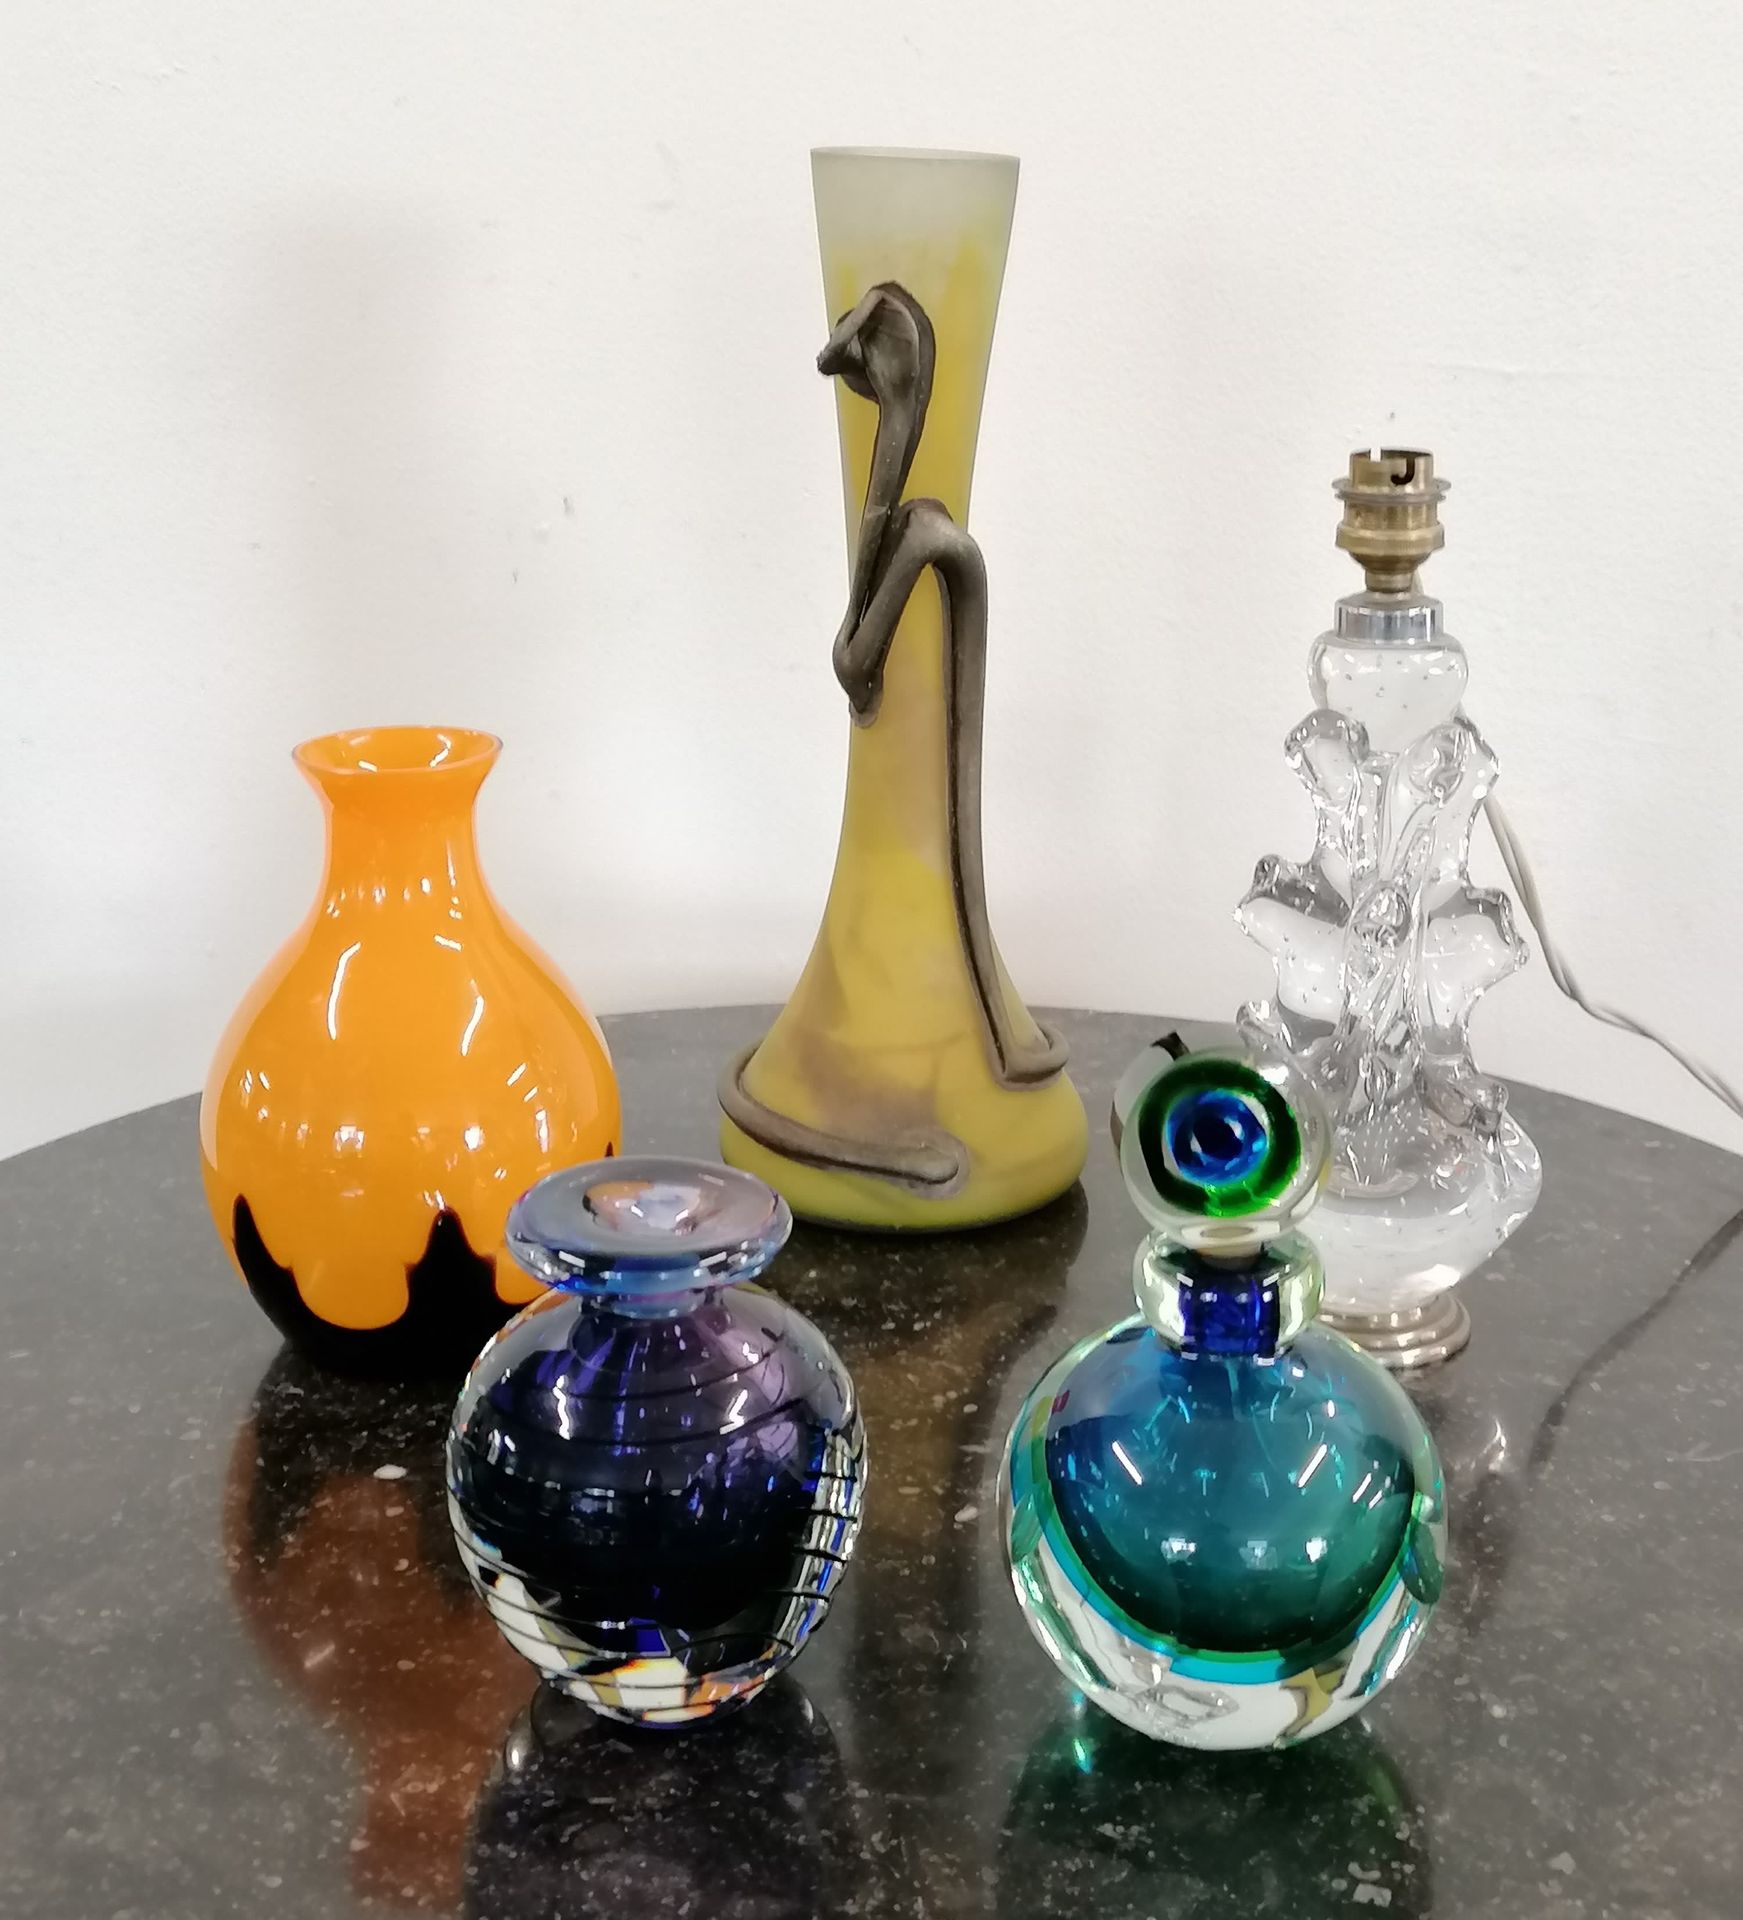 Null 一批玻璃器皿

包括。

两件彩色切割玻璃瓶，高约17英尺

窄颈花瓶

灯脚

有金属应用的花瓶